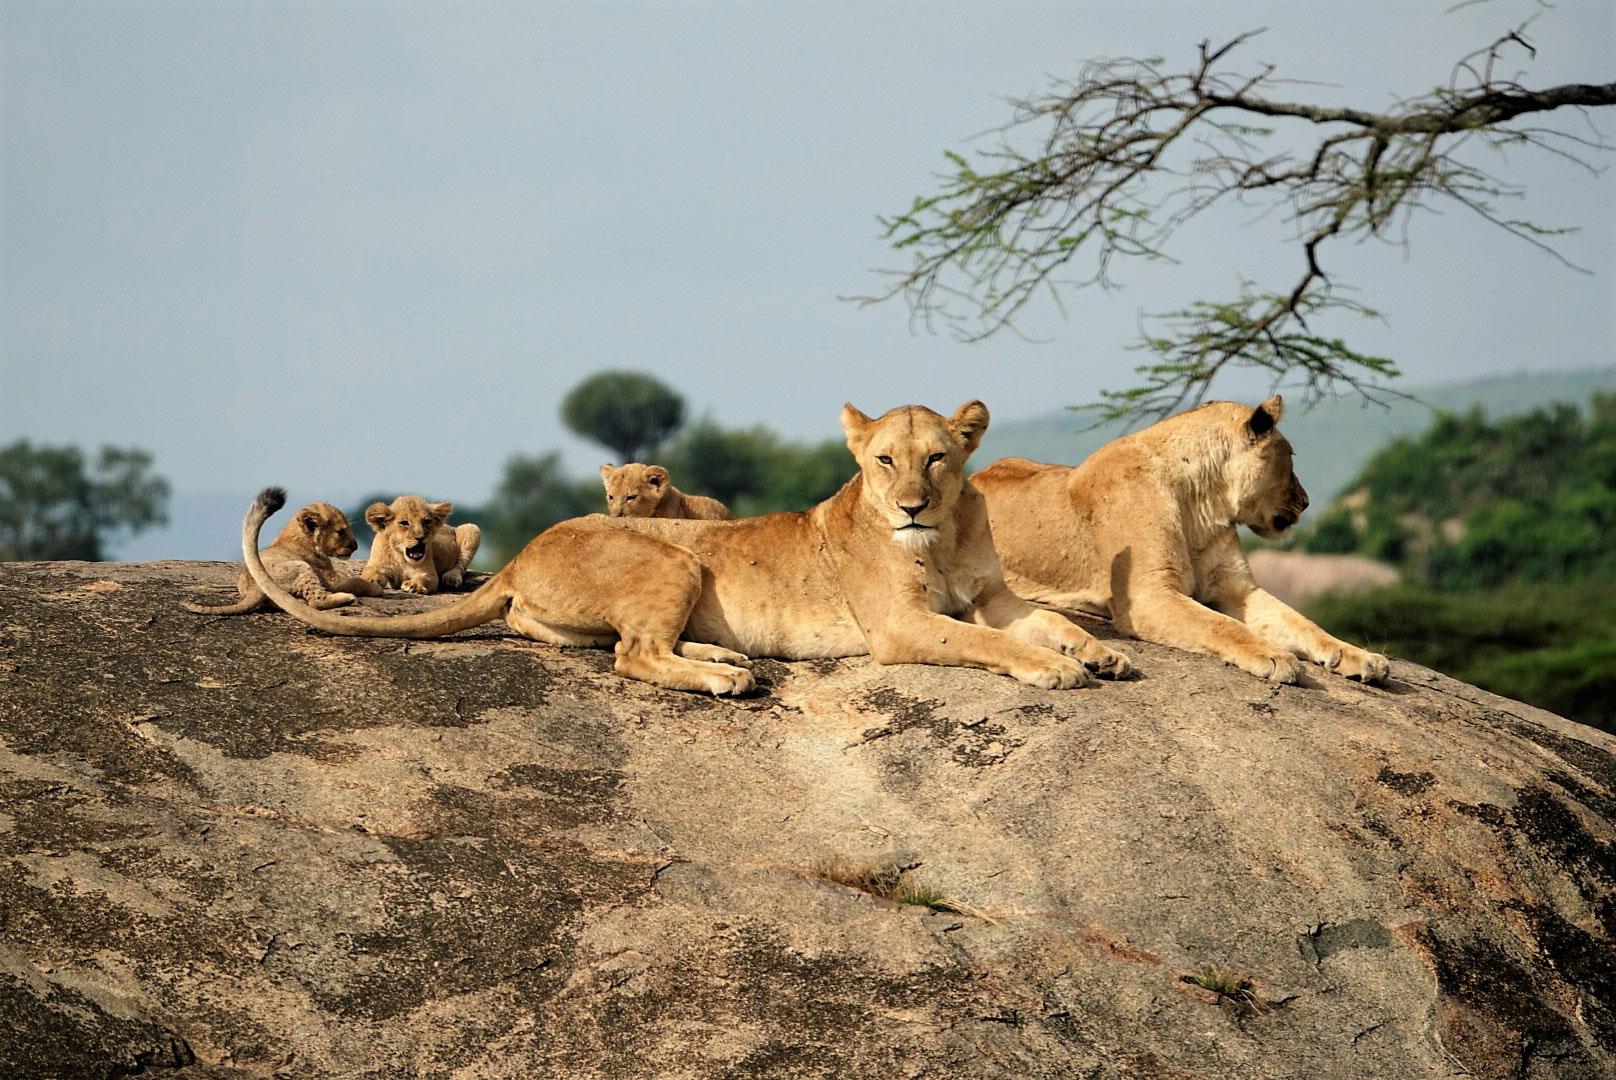 Tanzania safari best time to visit